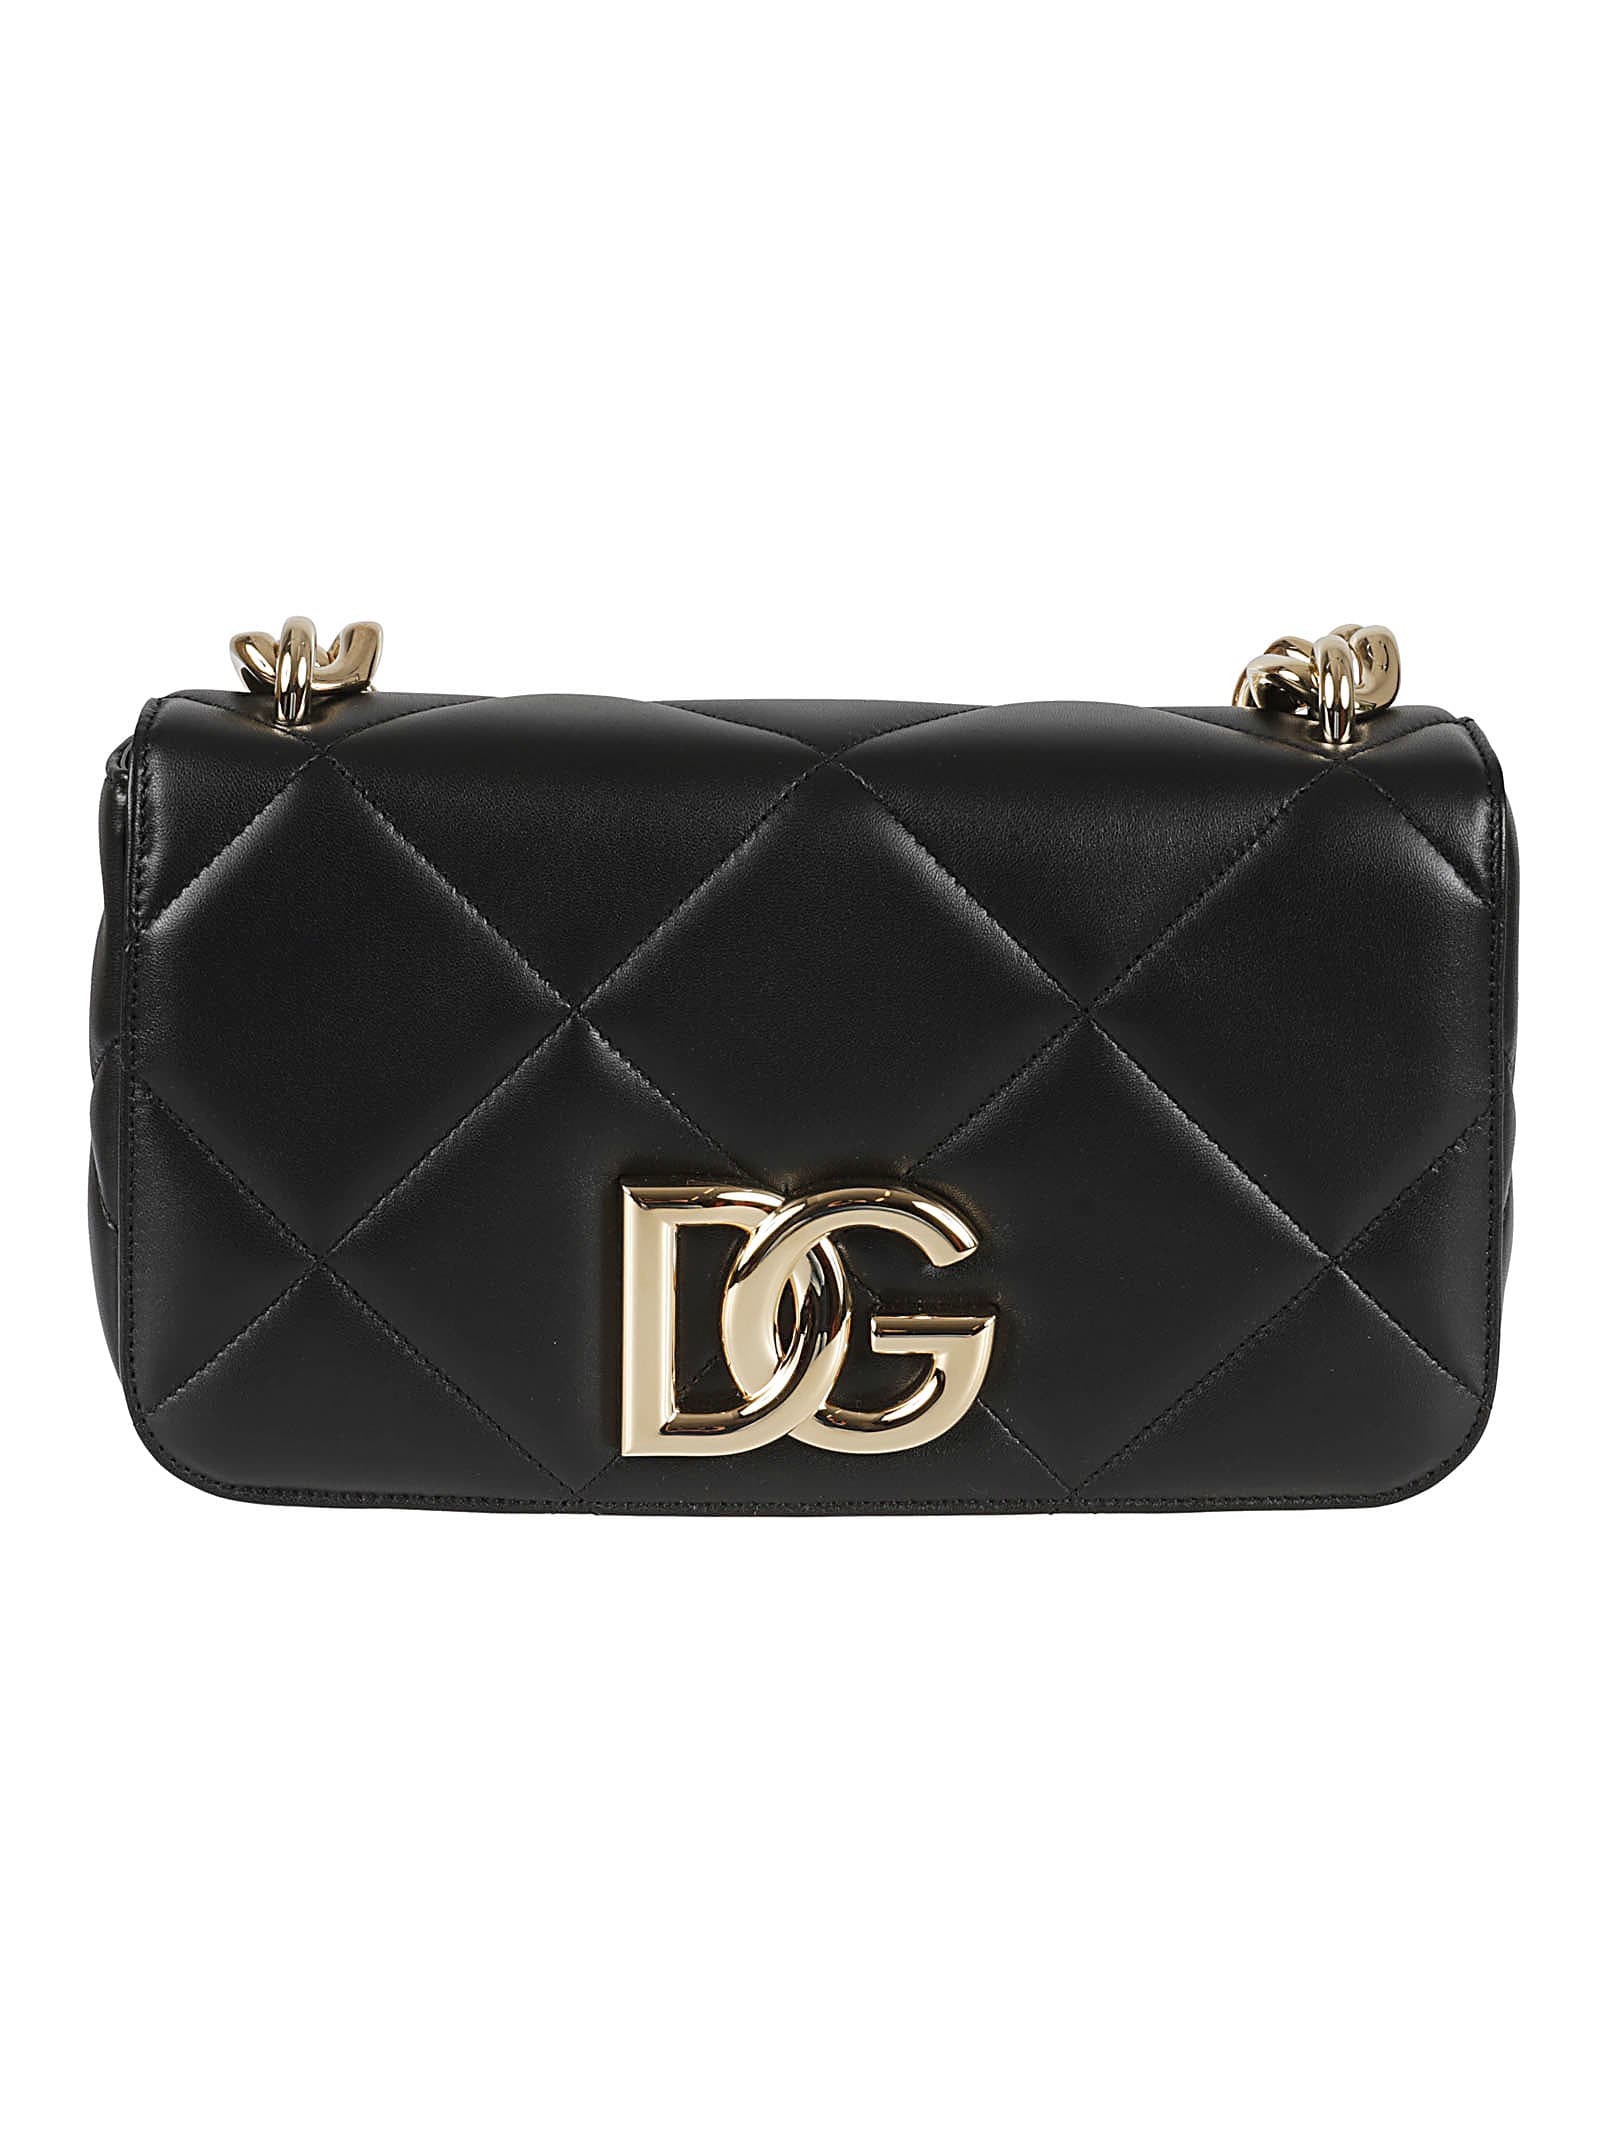 Dolce & Gabbana Logo Chain Strap Quilted Shoulder Bag